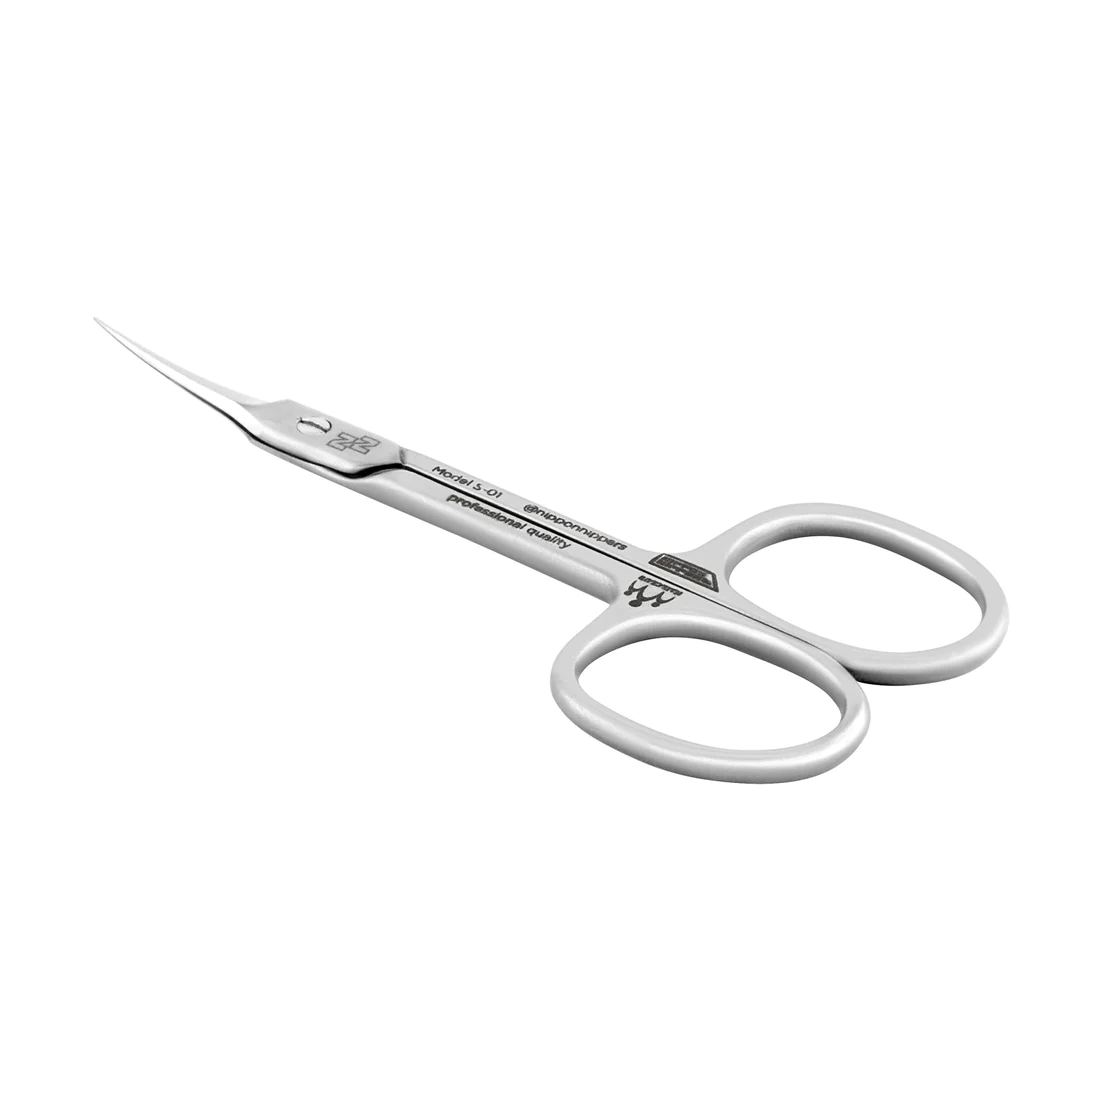 NIPPON NIPPERS Cuticle scissors S-01